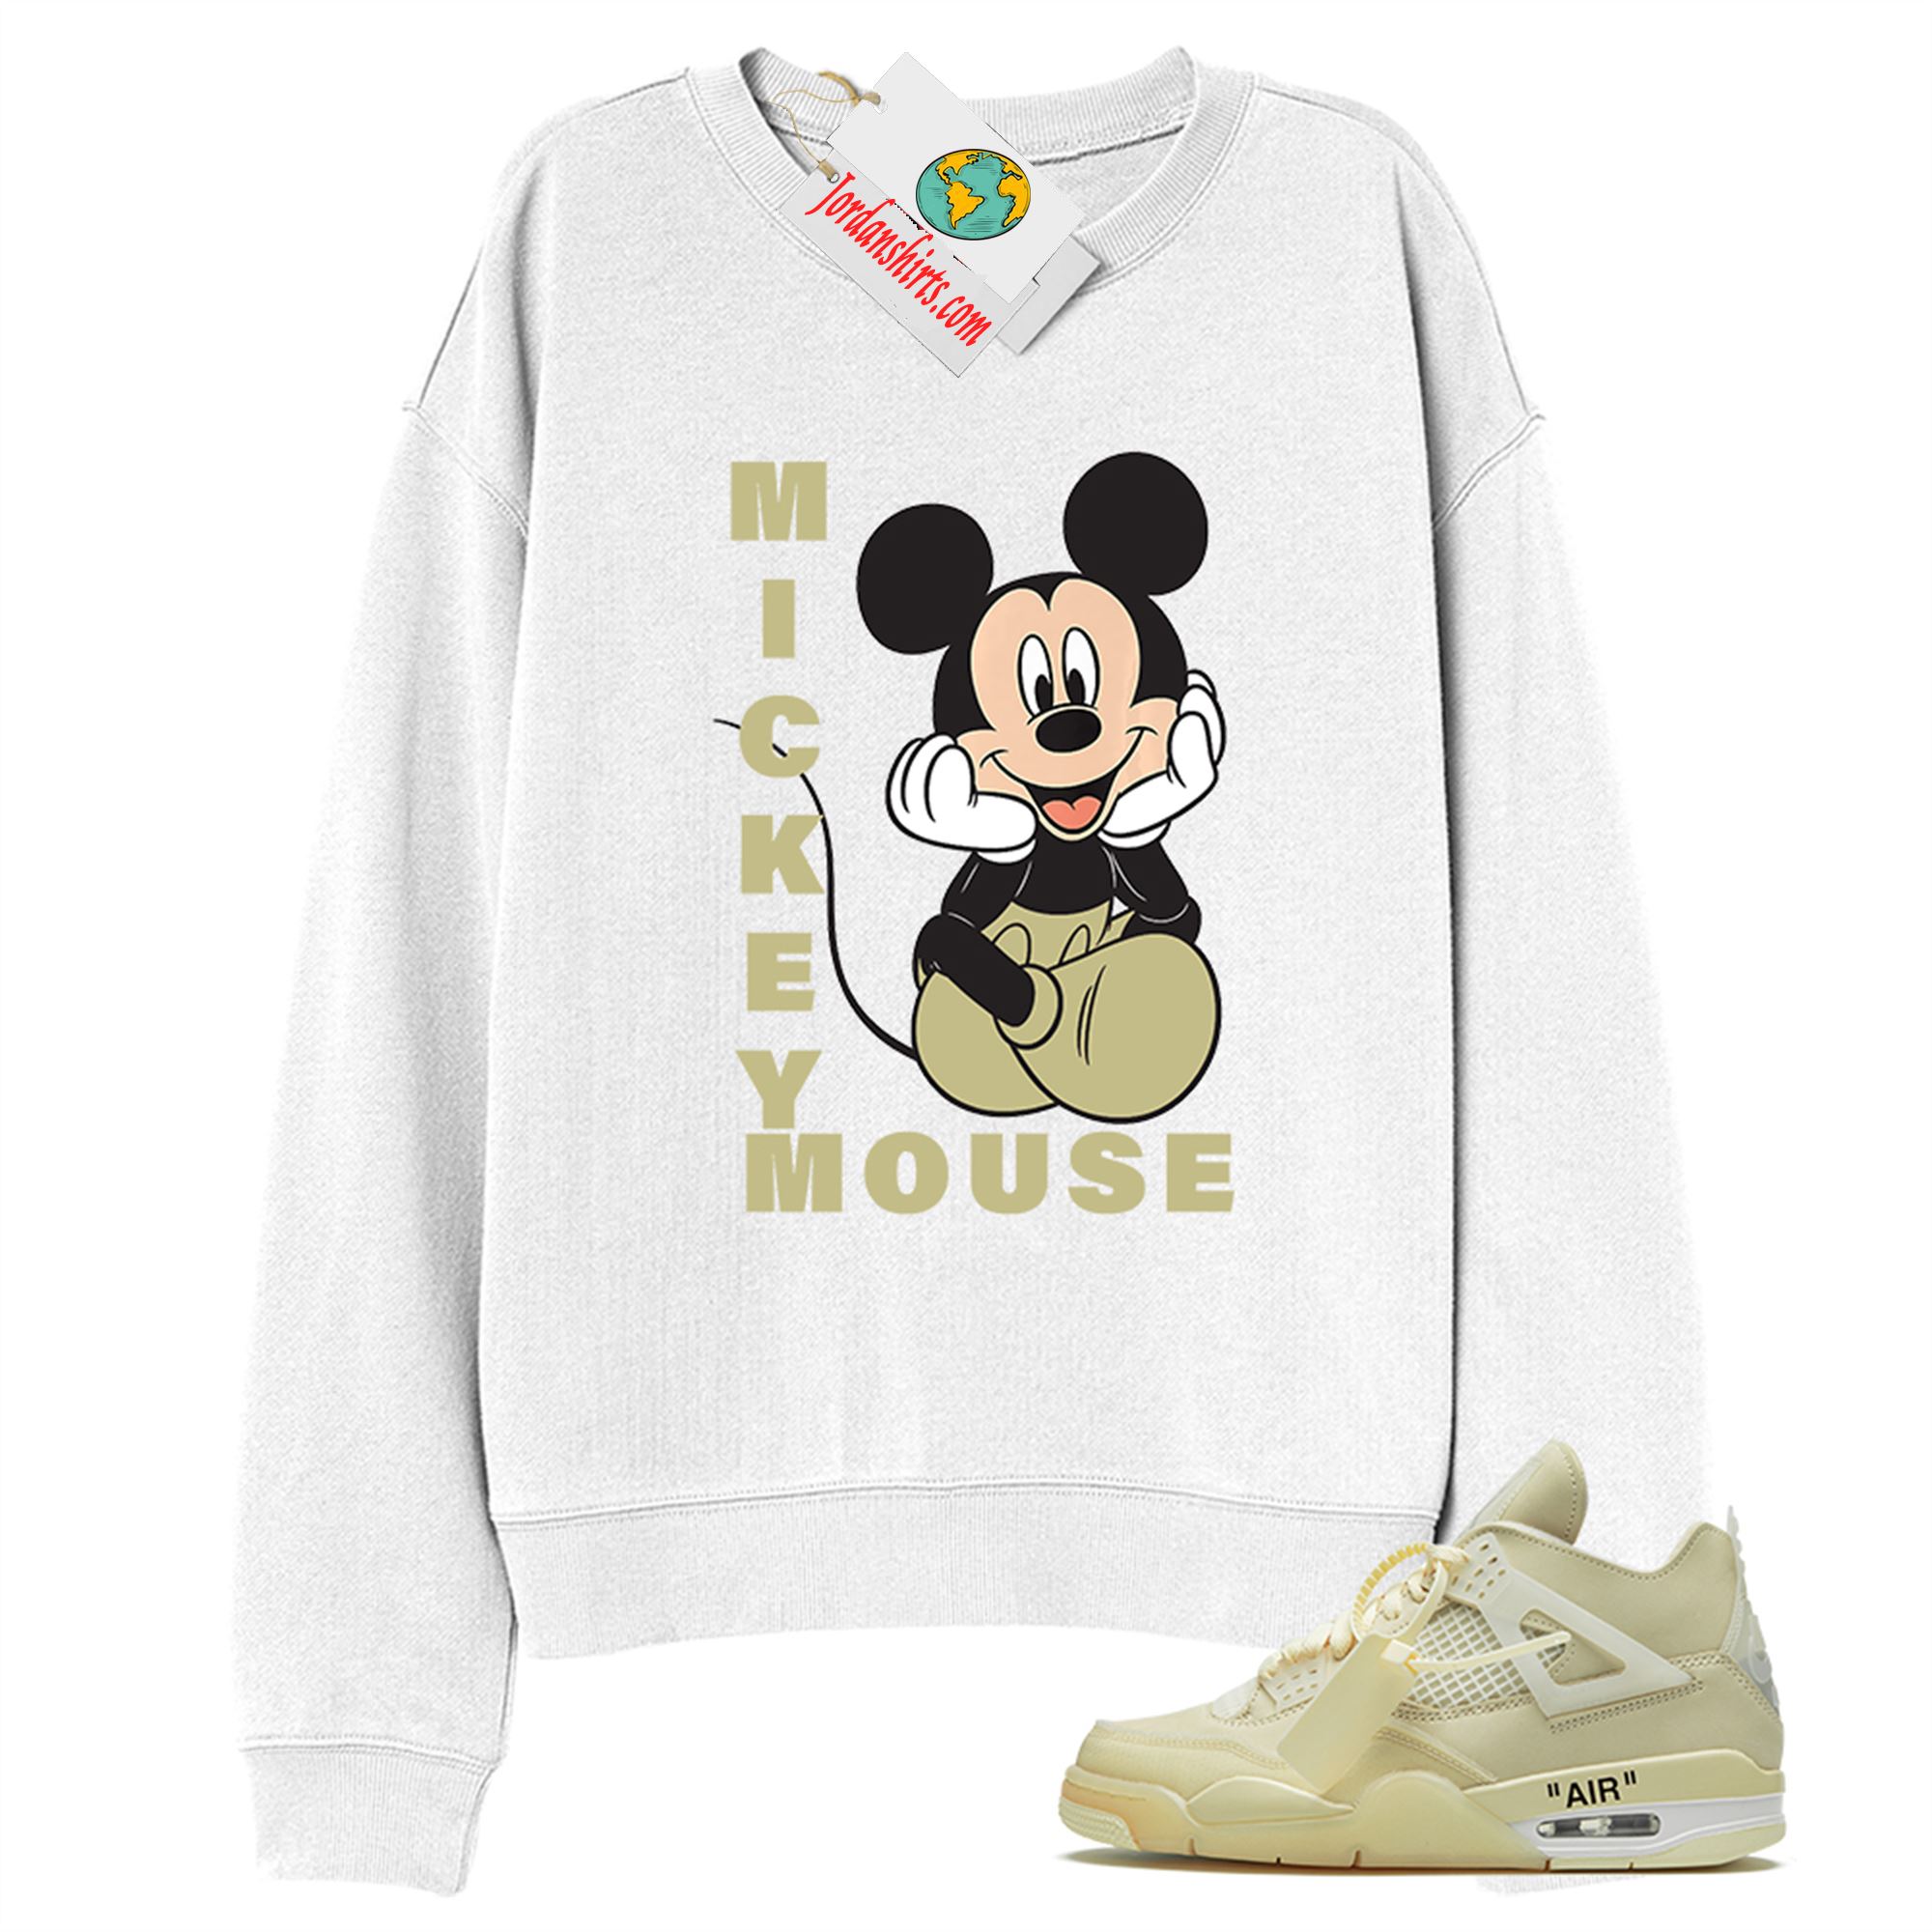 Jordan 4 Sweatshirt, Disney Mickey Mouse Hands In Face White Sweatshirt Air Jordan 4 Off-white 4s Full Size Up To 5xl